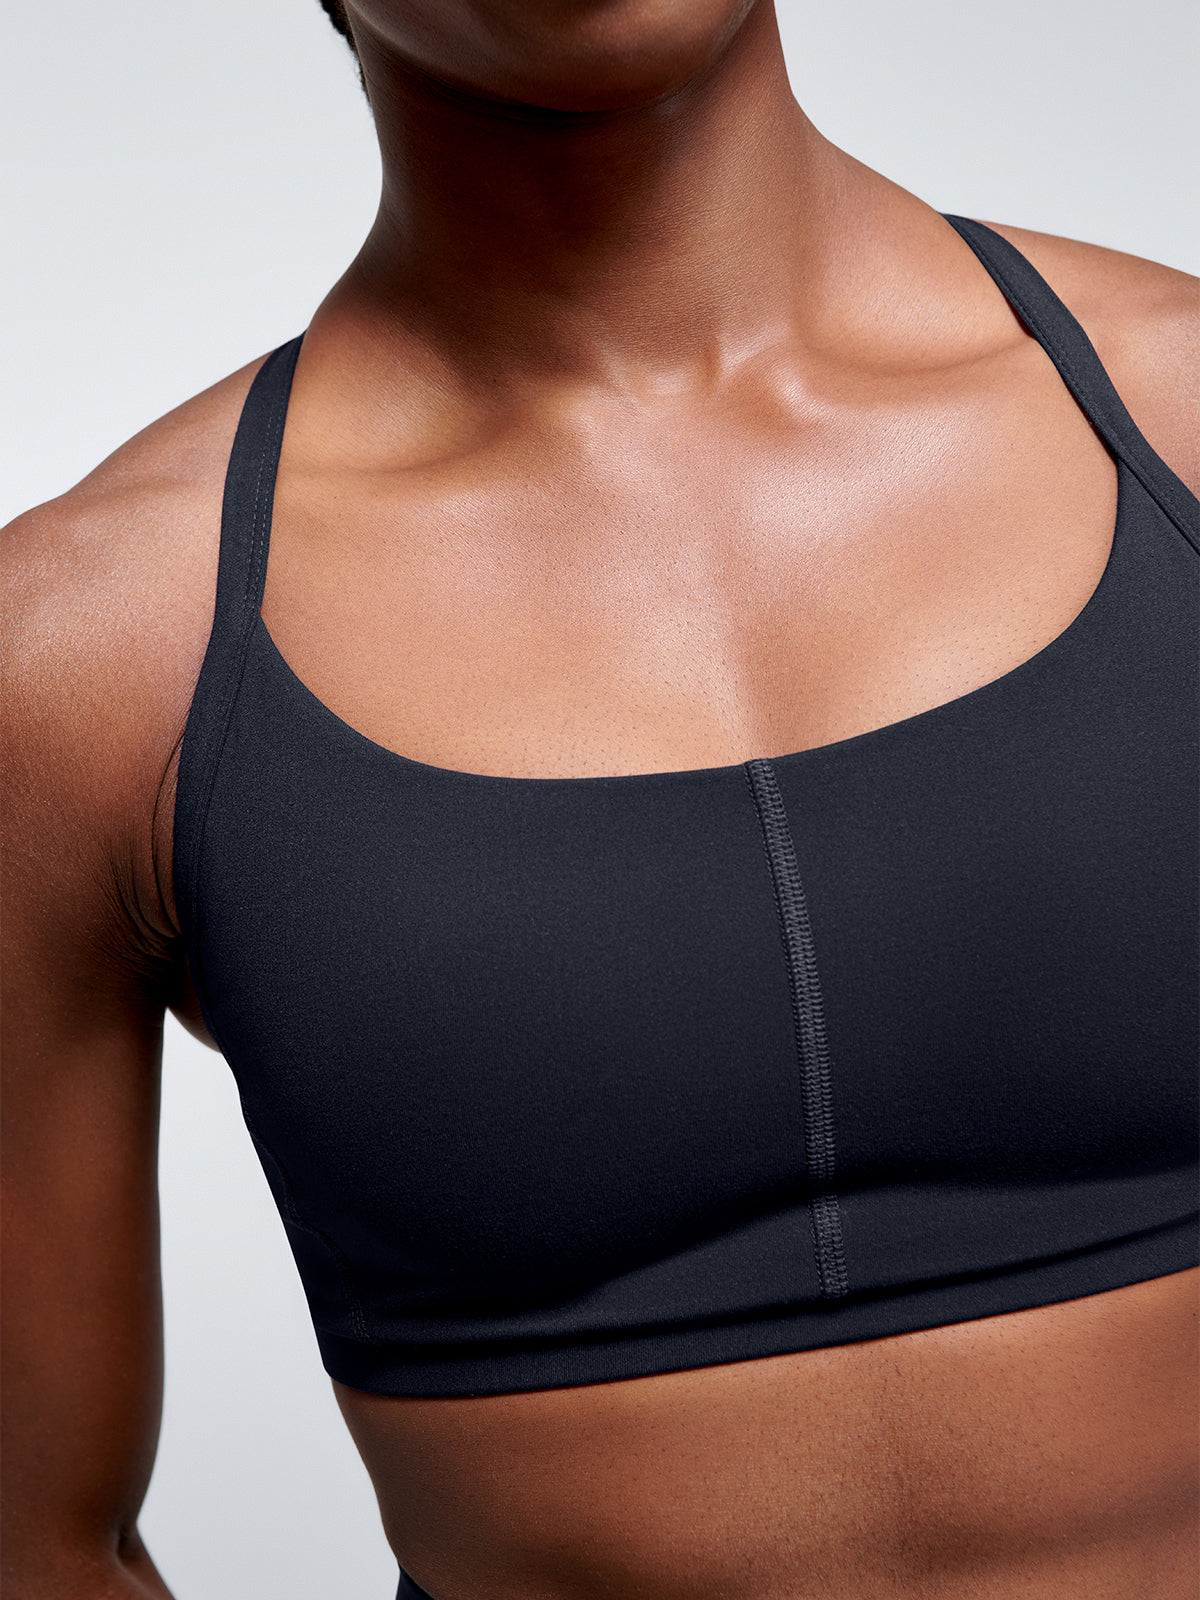 Womens fatal attraction padded black sports bra 2